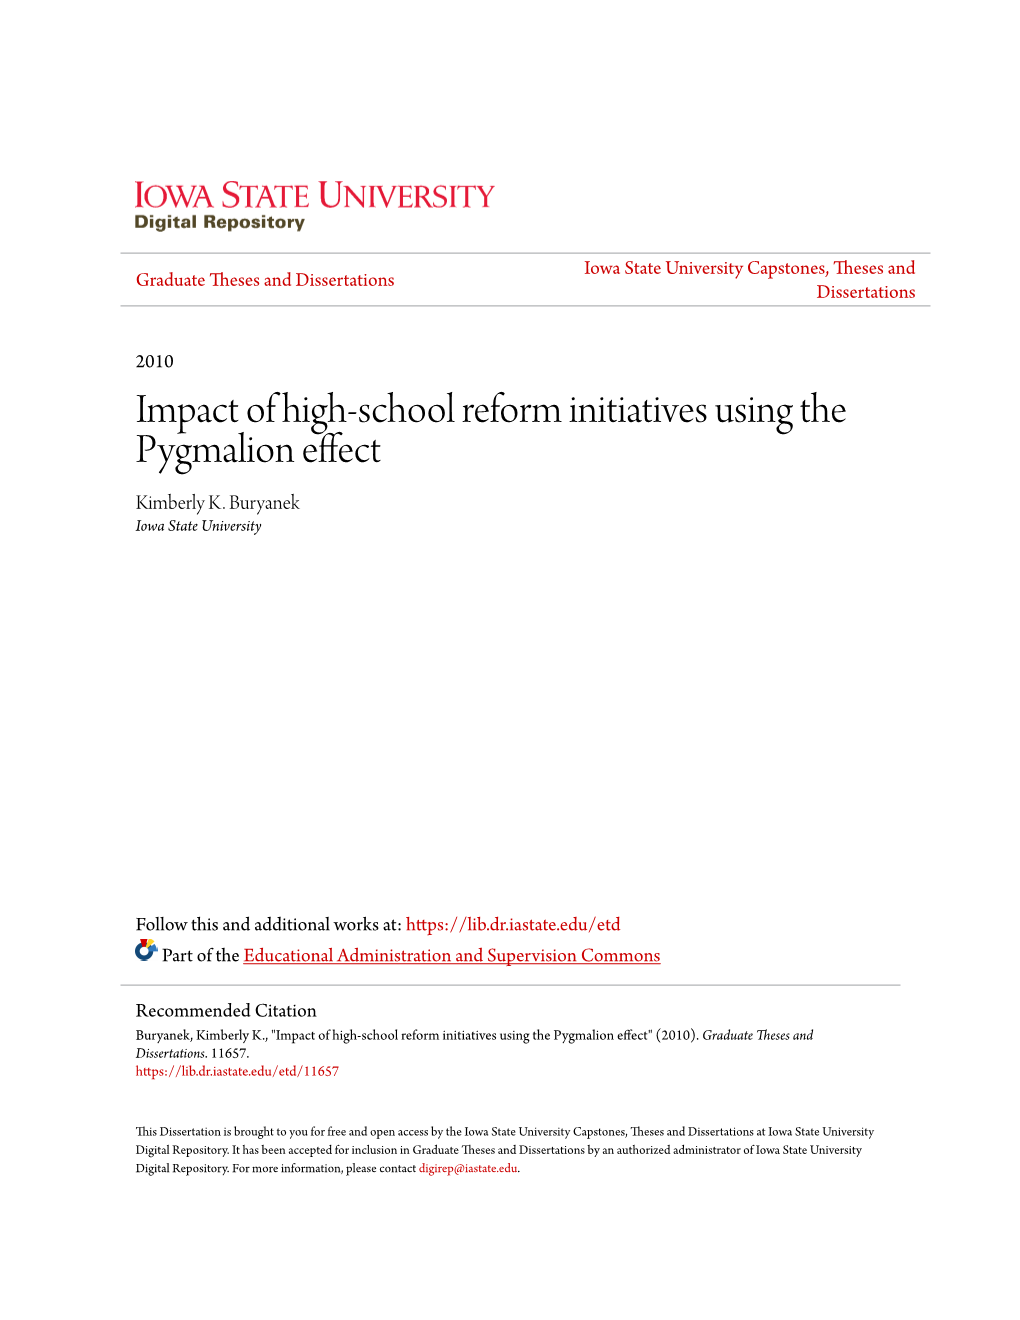 Impact of High-School Reform Initiatives Using the Pygmalion Effect Kimberly K